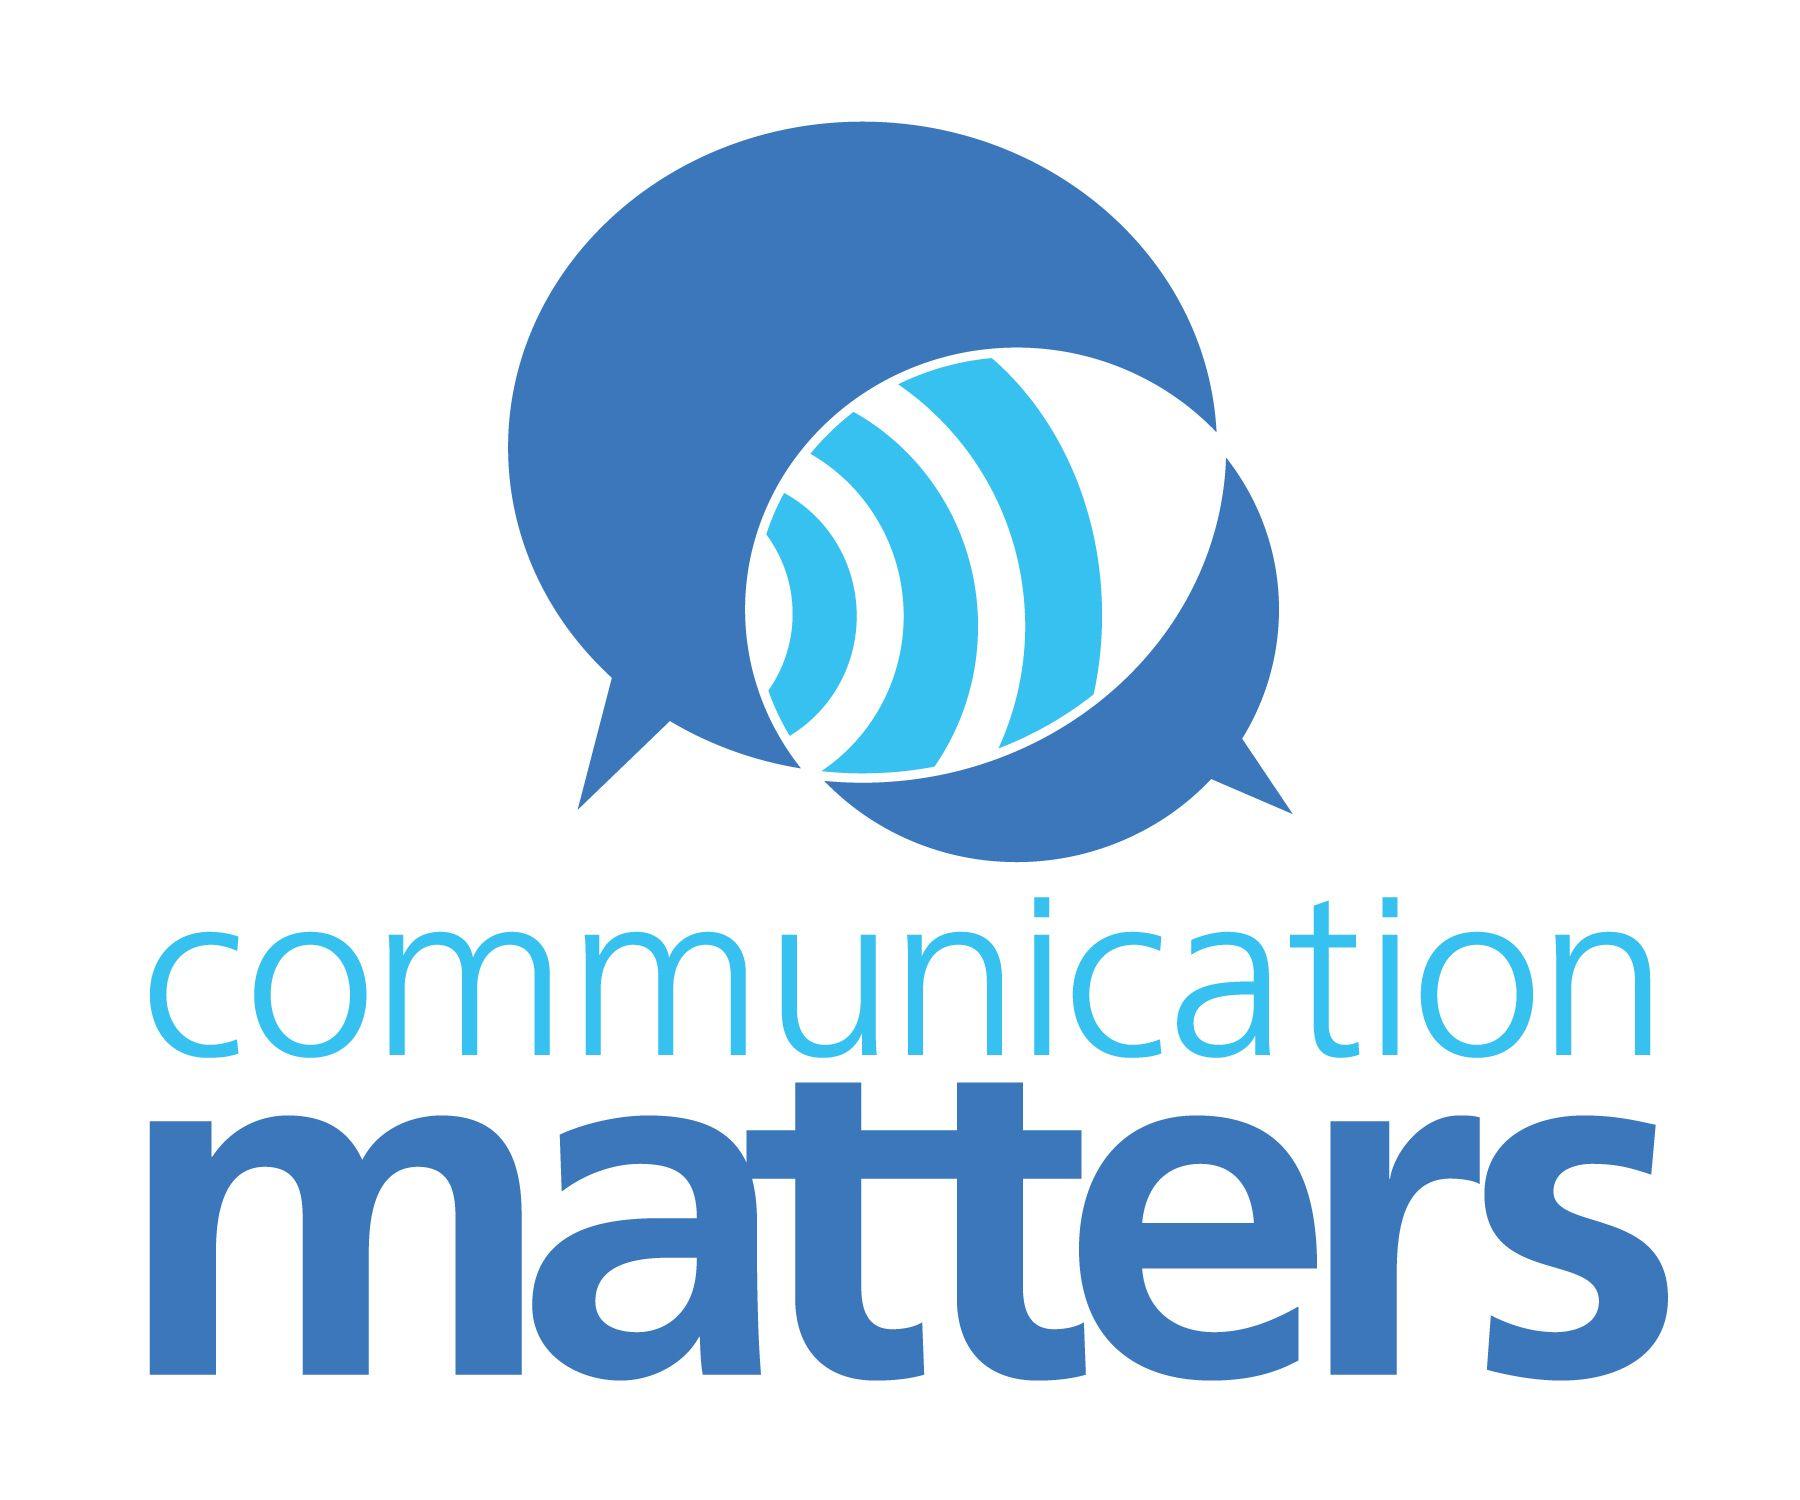 Communication Logo - Communication Logos